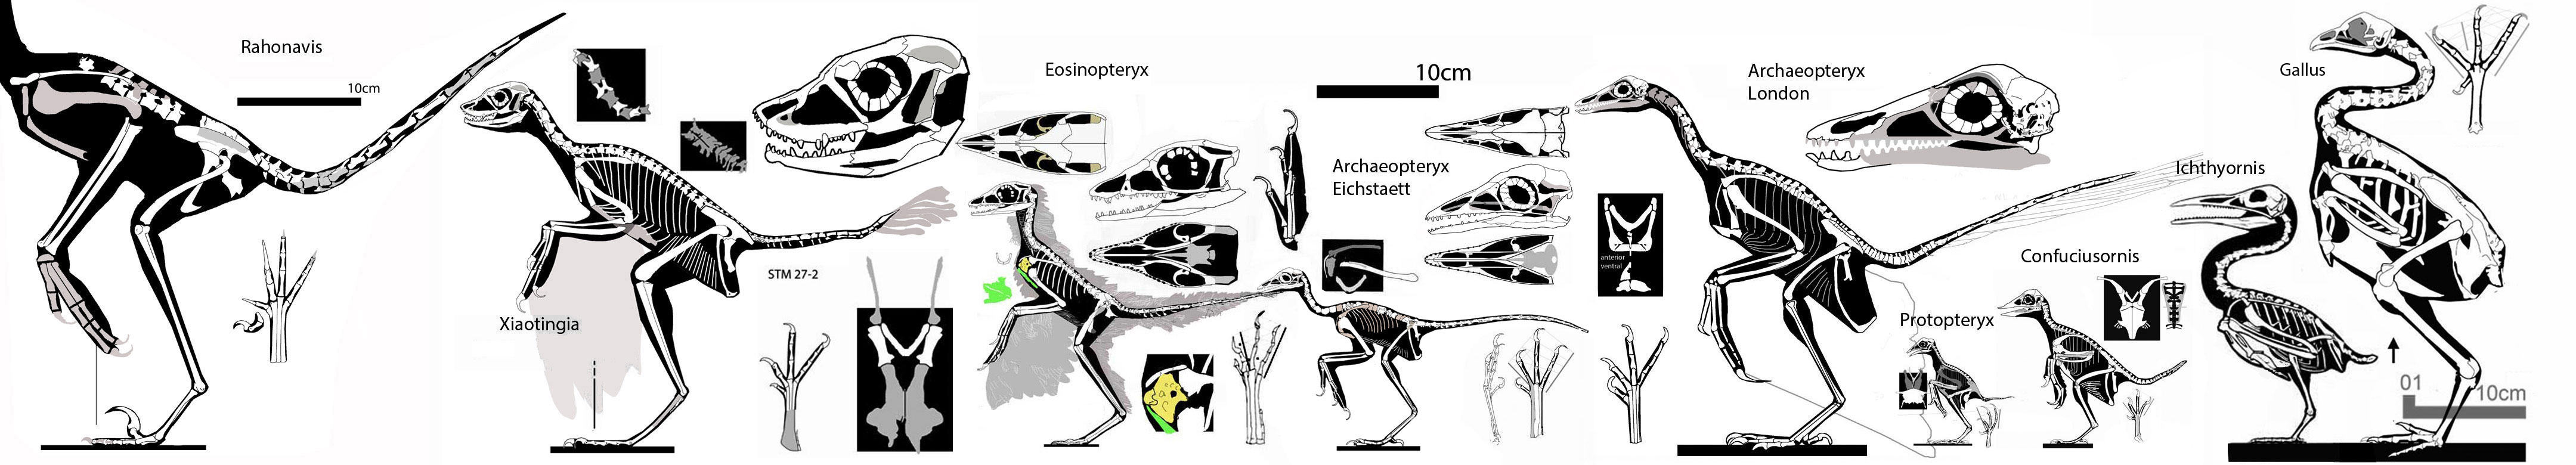 Archaeopteryx, Xiaotingia, Eosinopteryx, Protopteryx - stem birds